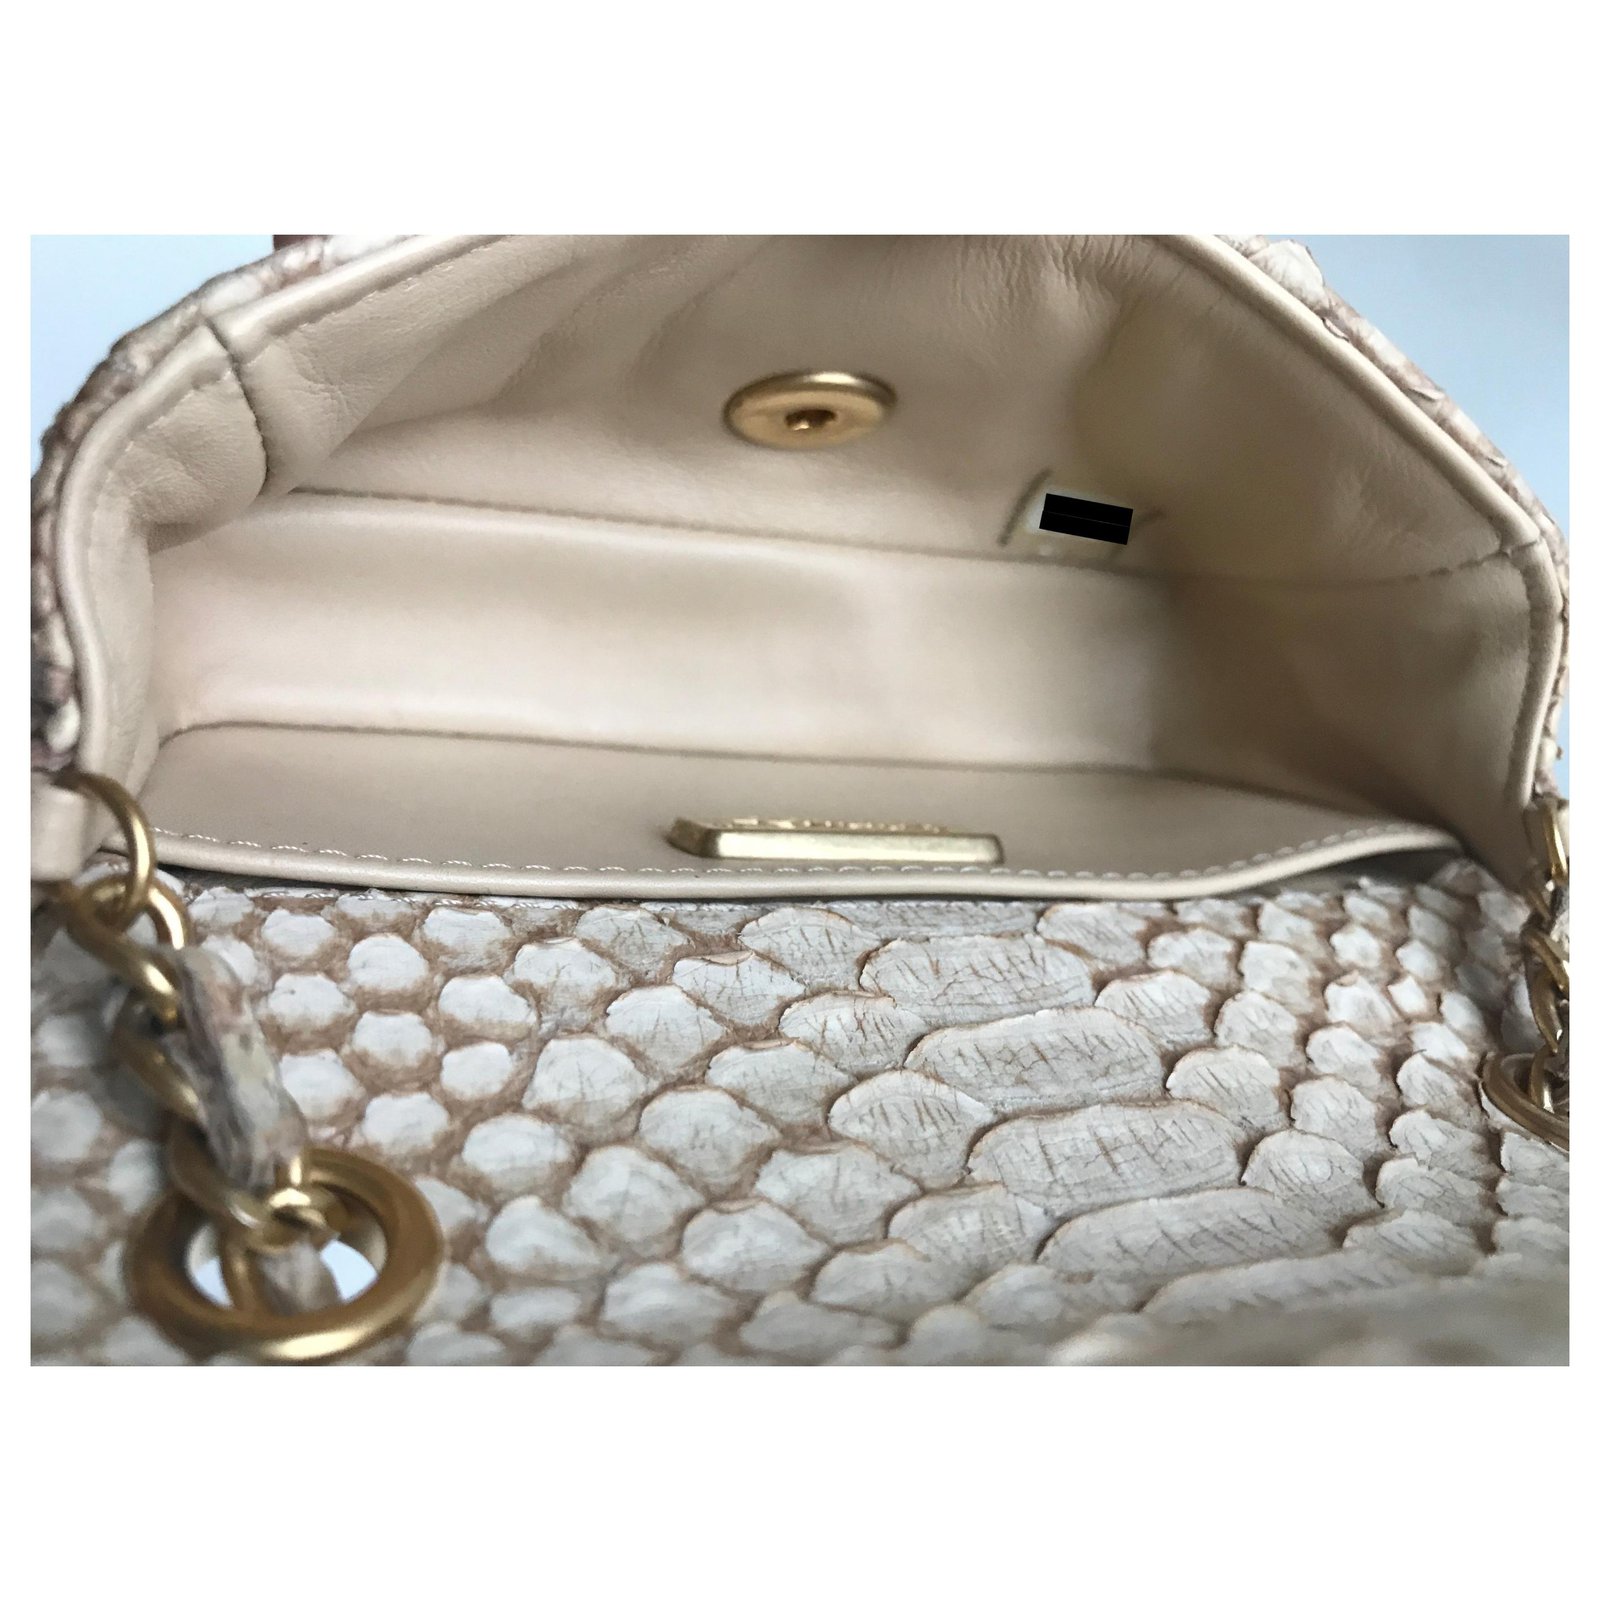 Chanel Timeless Mini Flap Bag luxurious python Beige Cream Leather